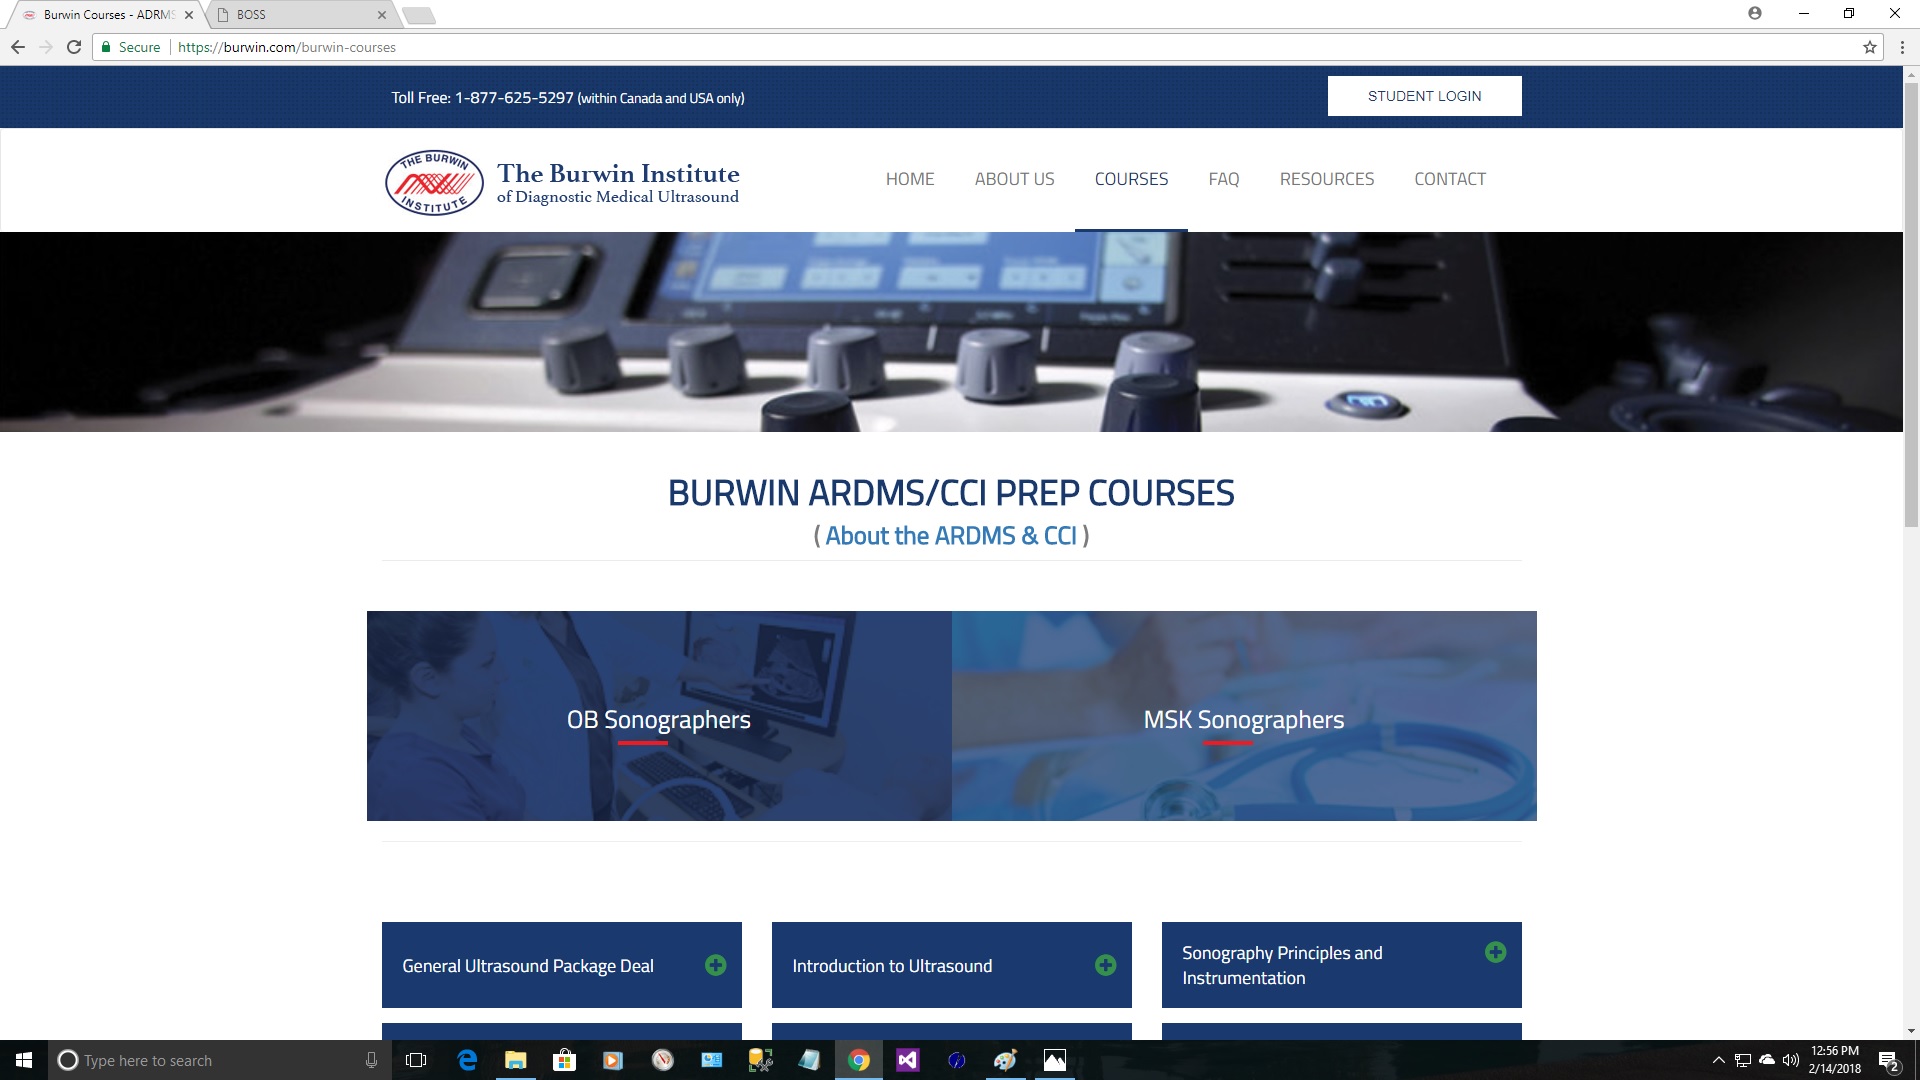 BOSS - Burwin Online Student System